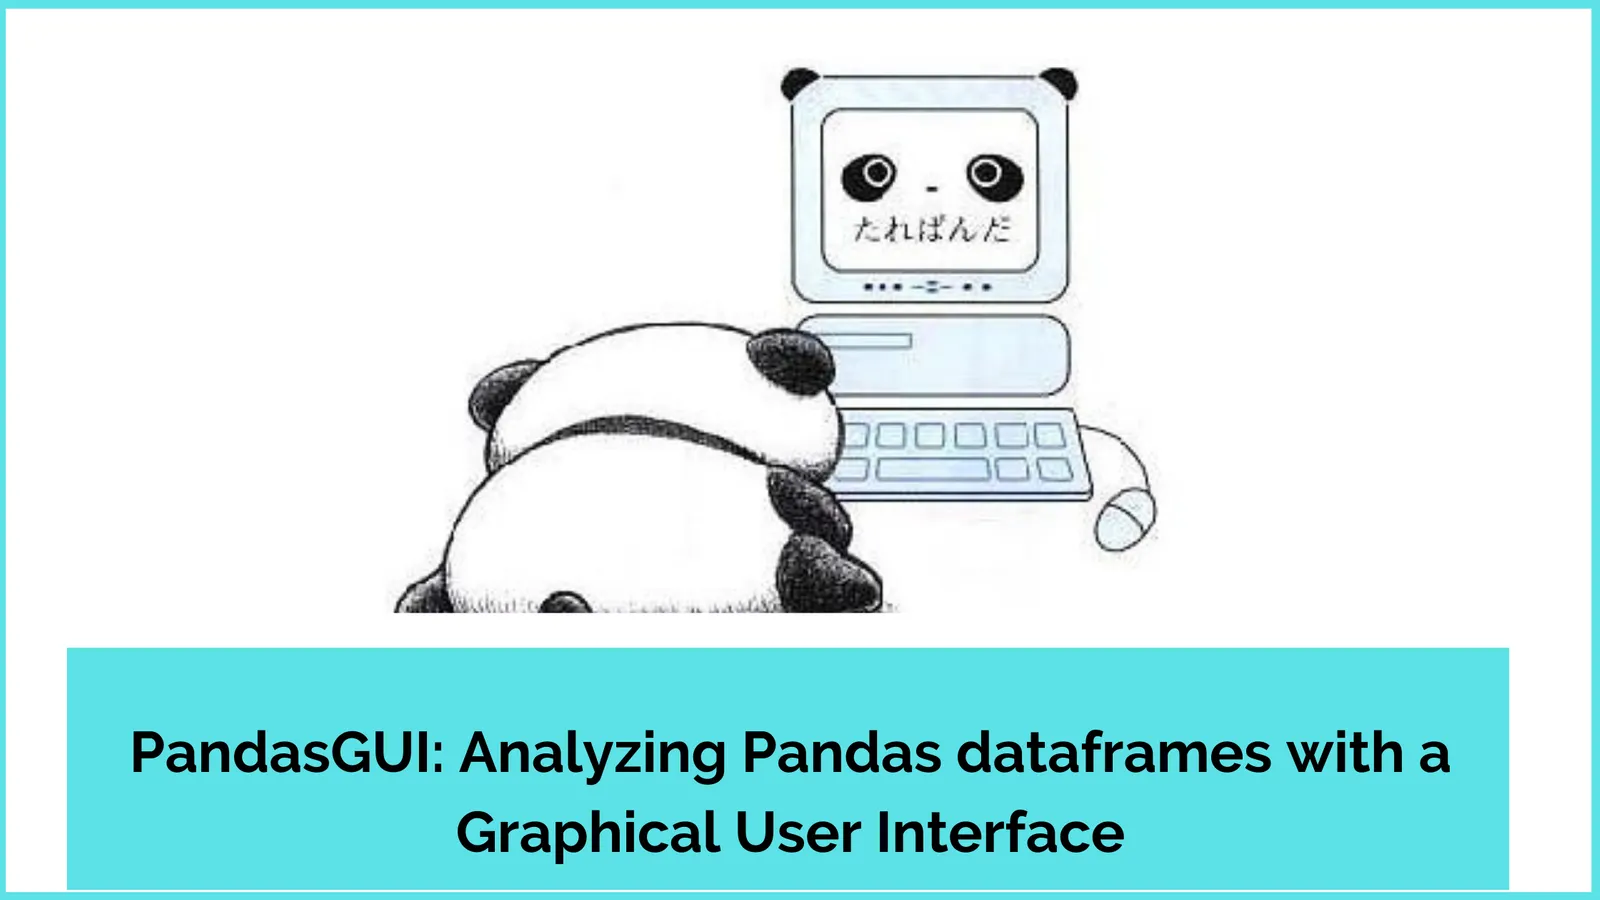 Exploratory Data Analysis using PandasGUI